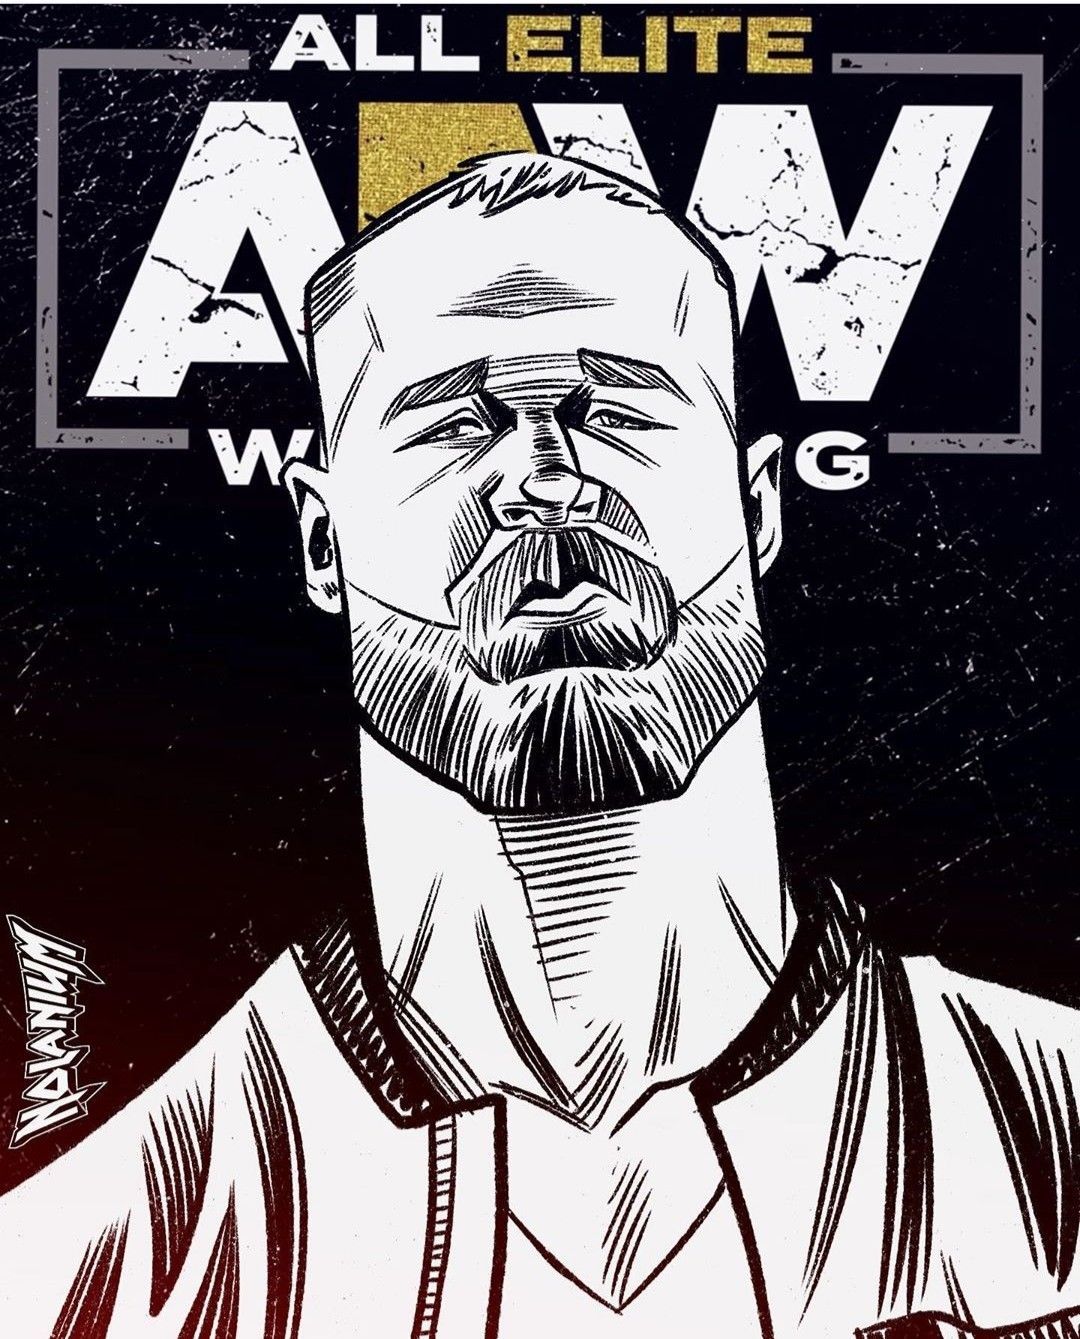 Jon Moxley AEW Art. Wwe wallpaper, Wrestling stars, Wwf